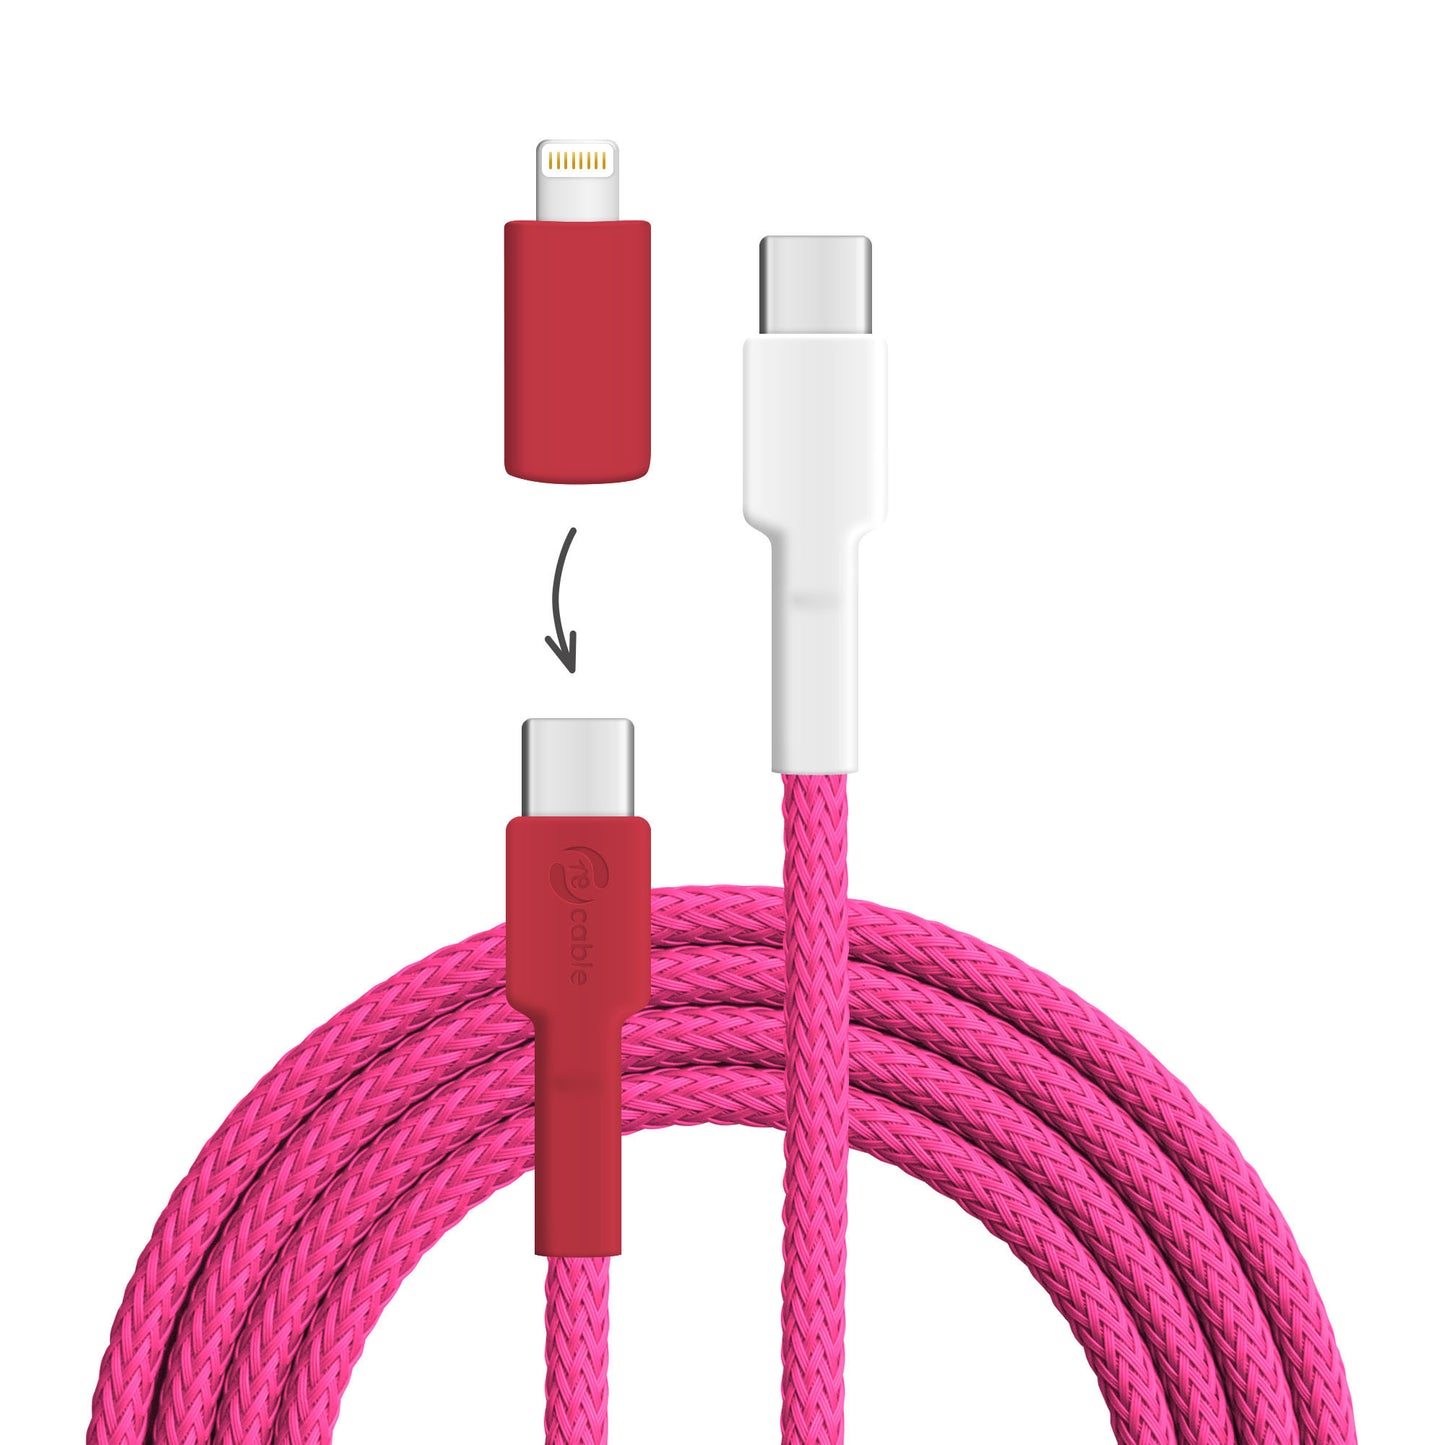 USB-Kabel, Design: Kubaflamingo, Anschlüsse: USB C auf USB C mit Lightning Adapter (nicht verbunden)